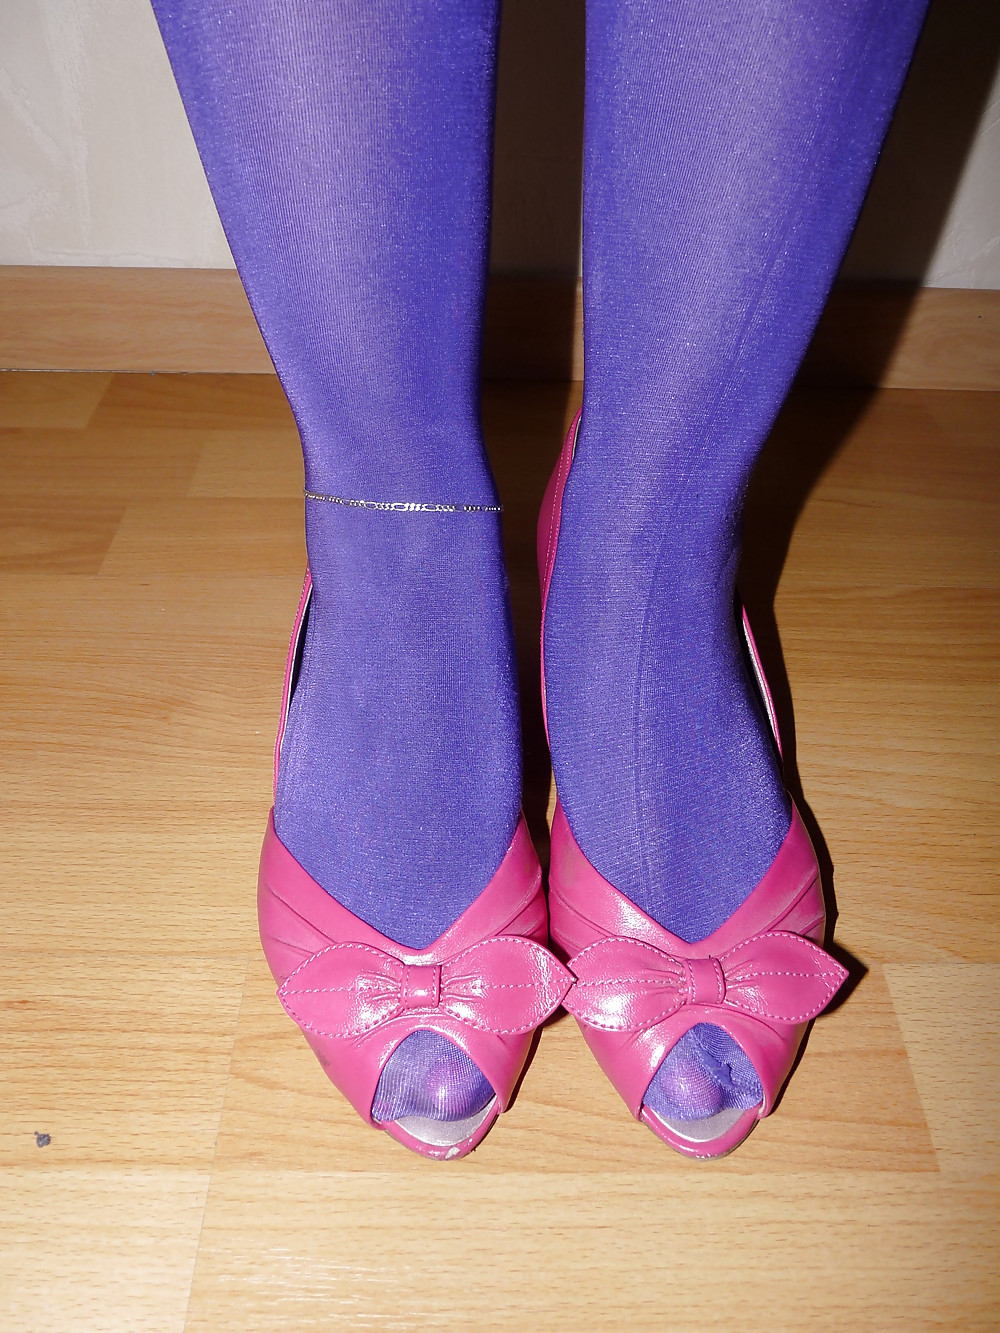 Esposas brillantes pantimedias púrpura rosa peep toes
 #15417065